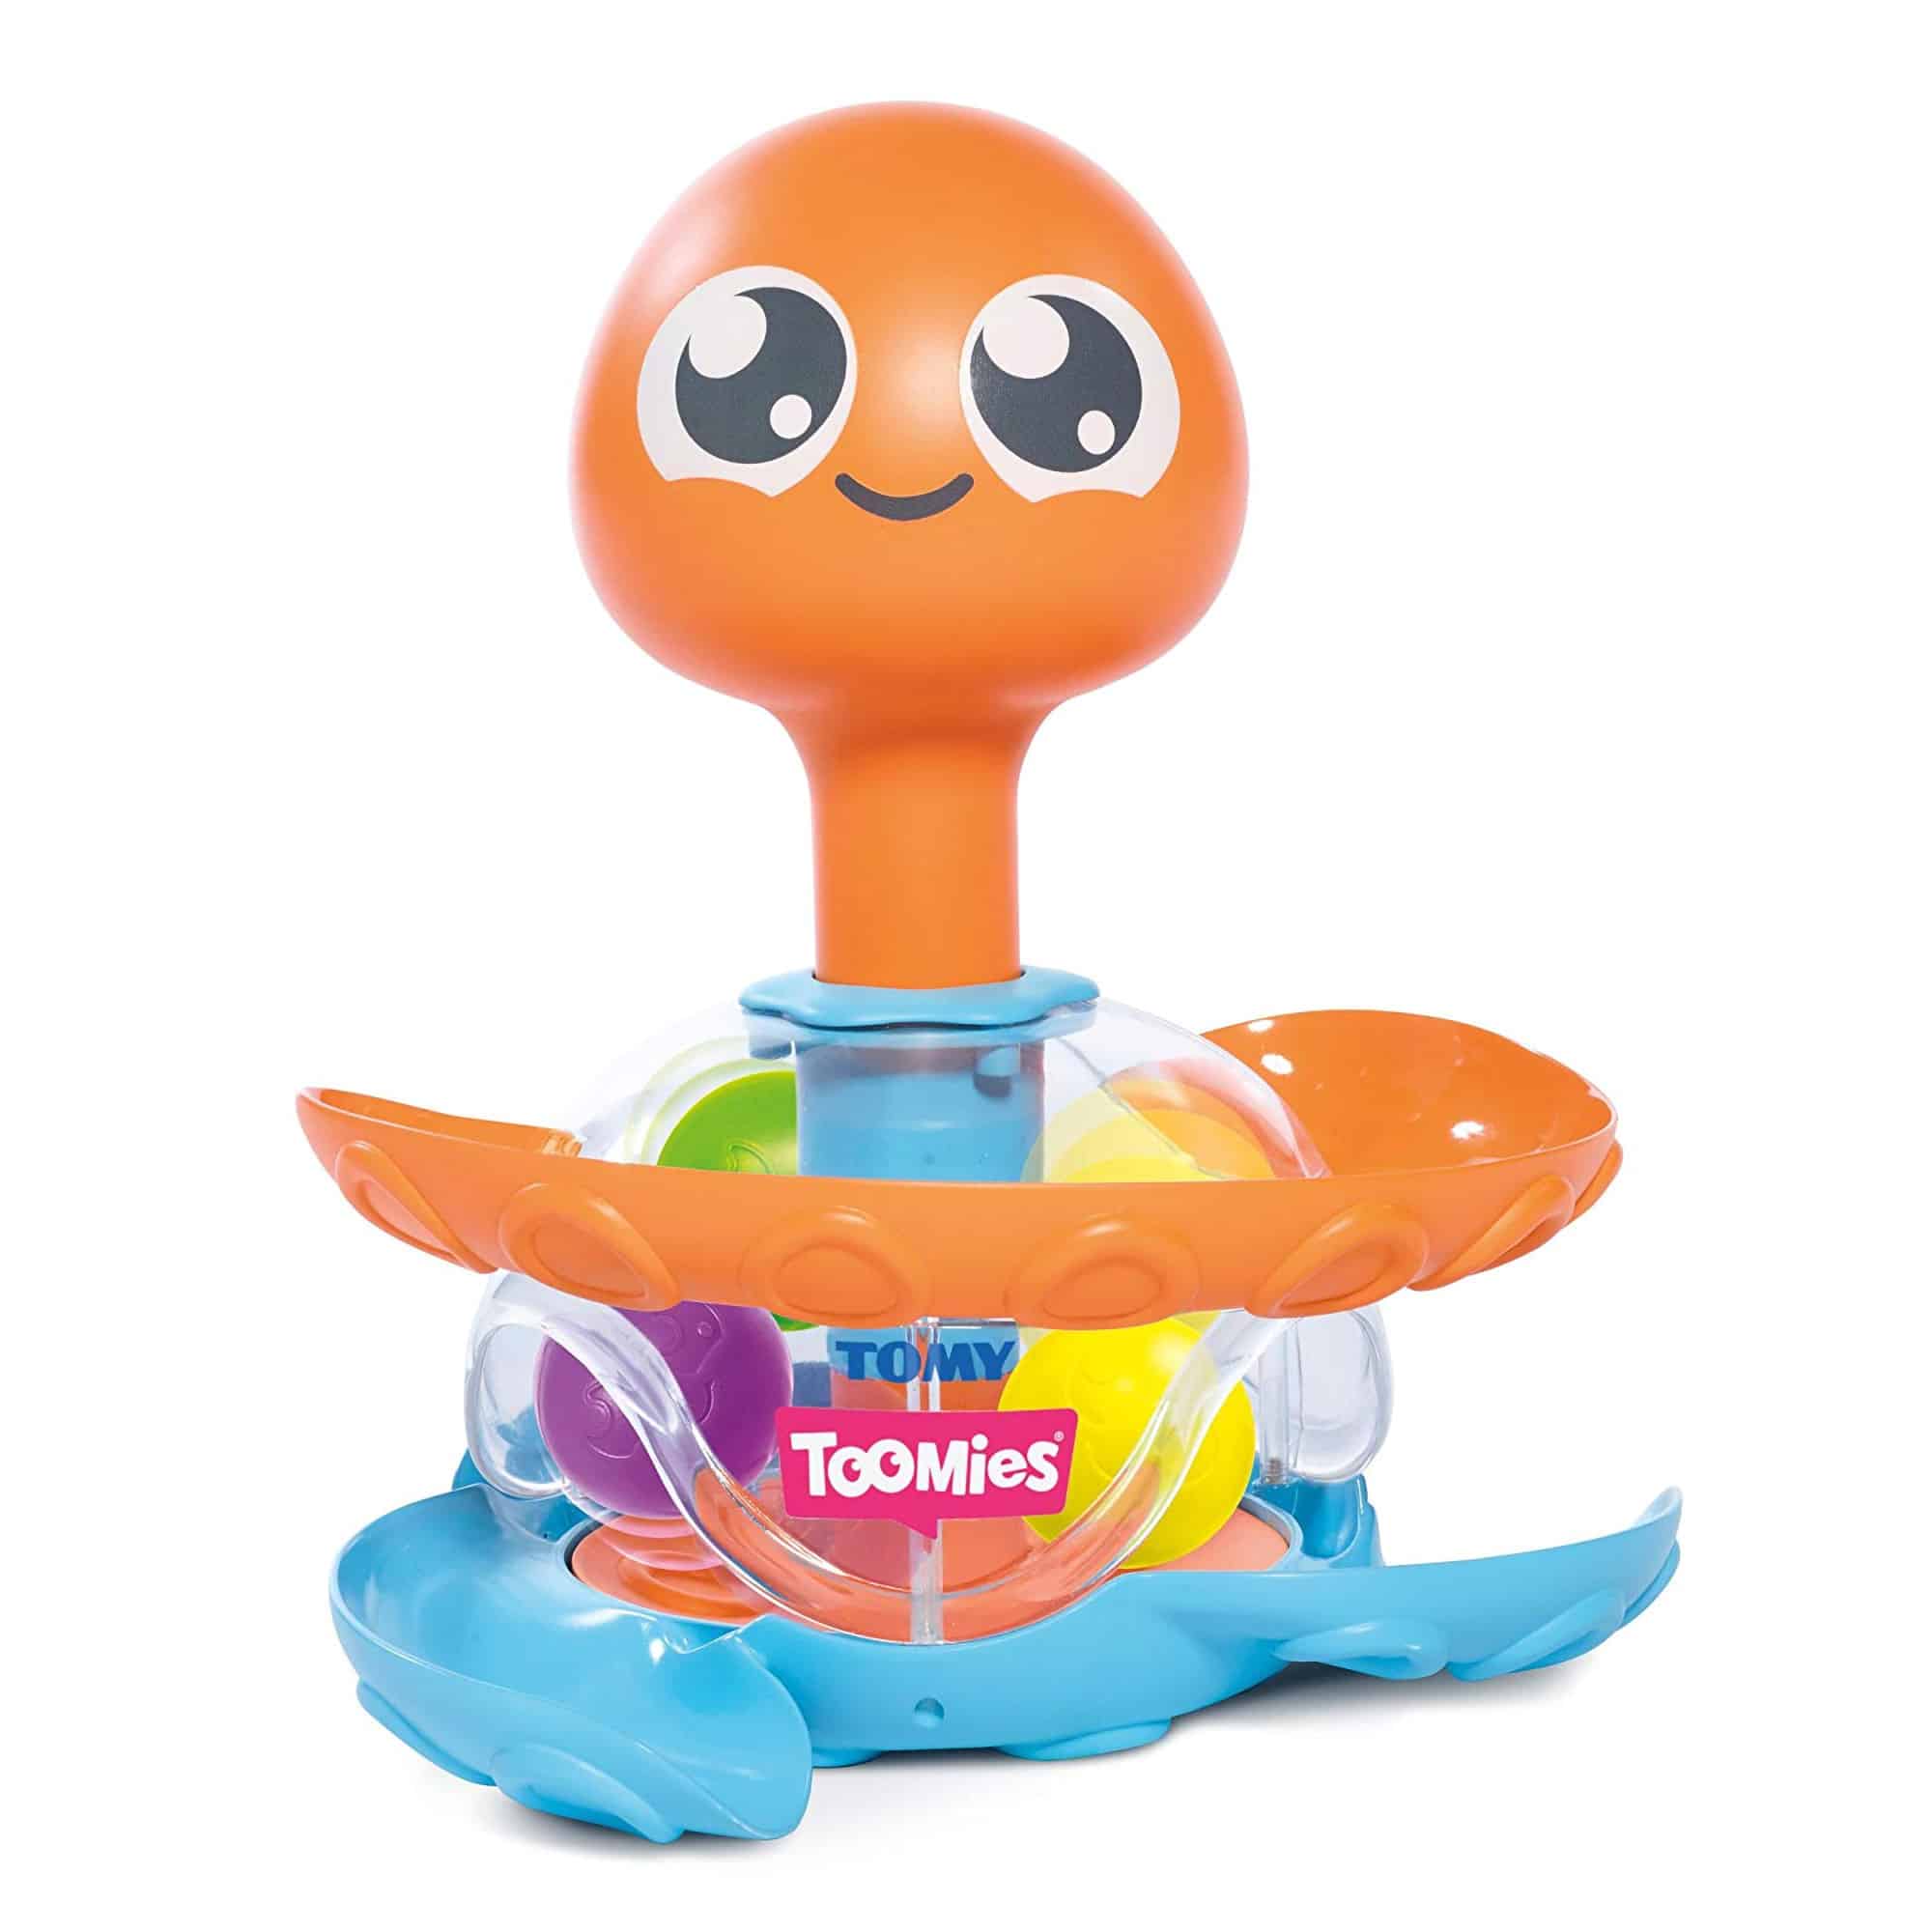 Tomy Toomies - Octopus Ball Toy